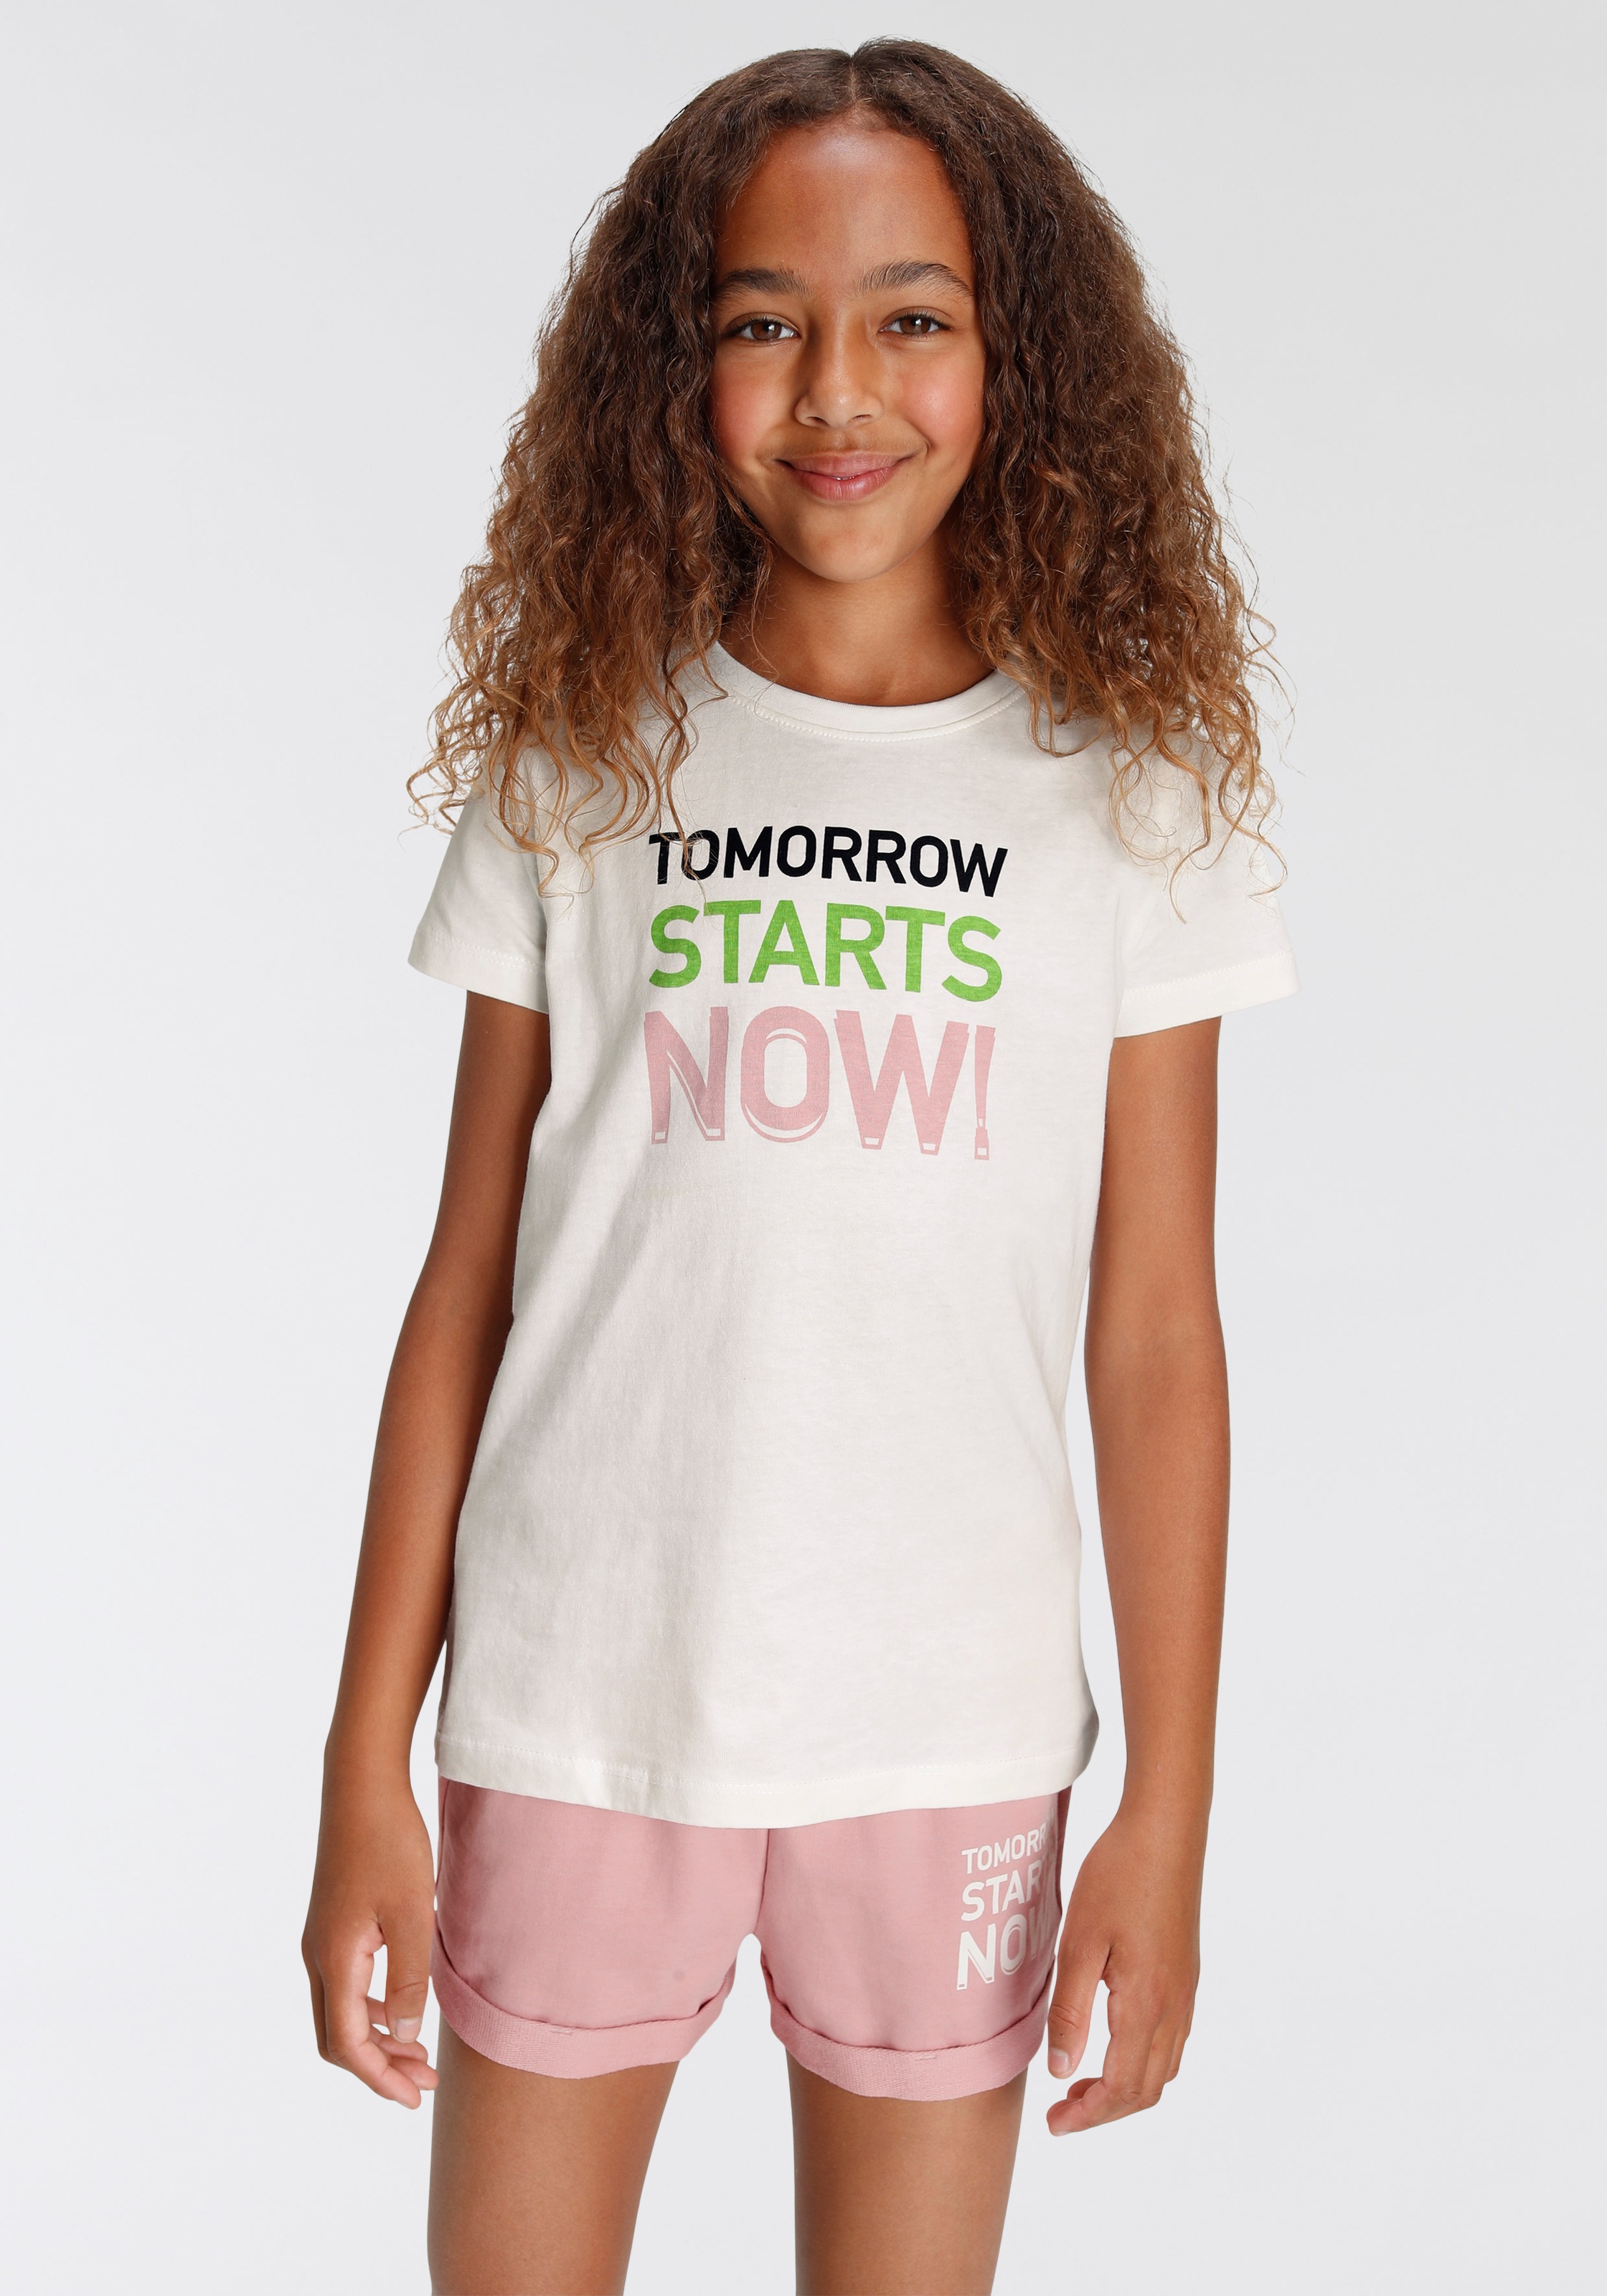 Druck %Sale starts KIDSWORLD now!«, im T-Shirt jetzt »Tomorrow